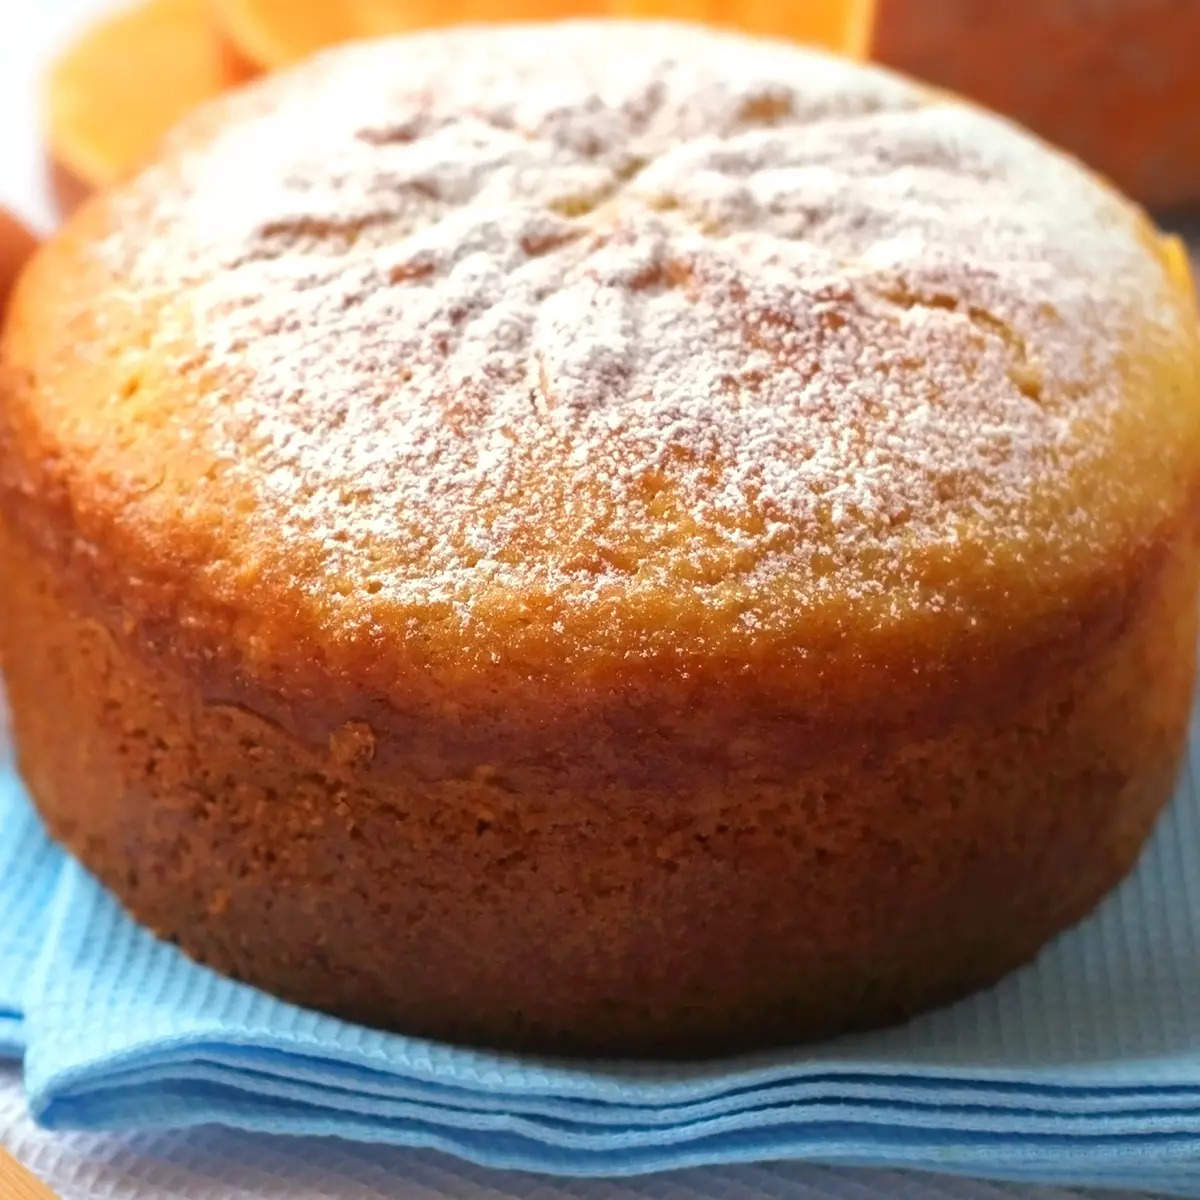 How To Prepare a Cake Pan: 3 Easy Steps